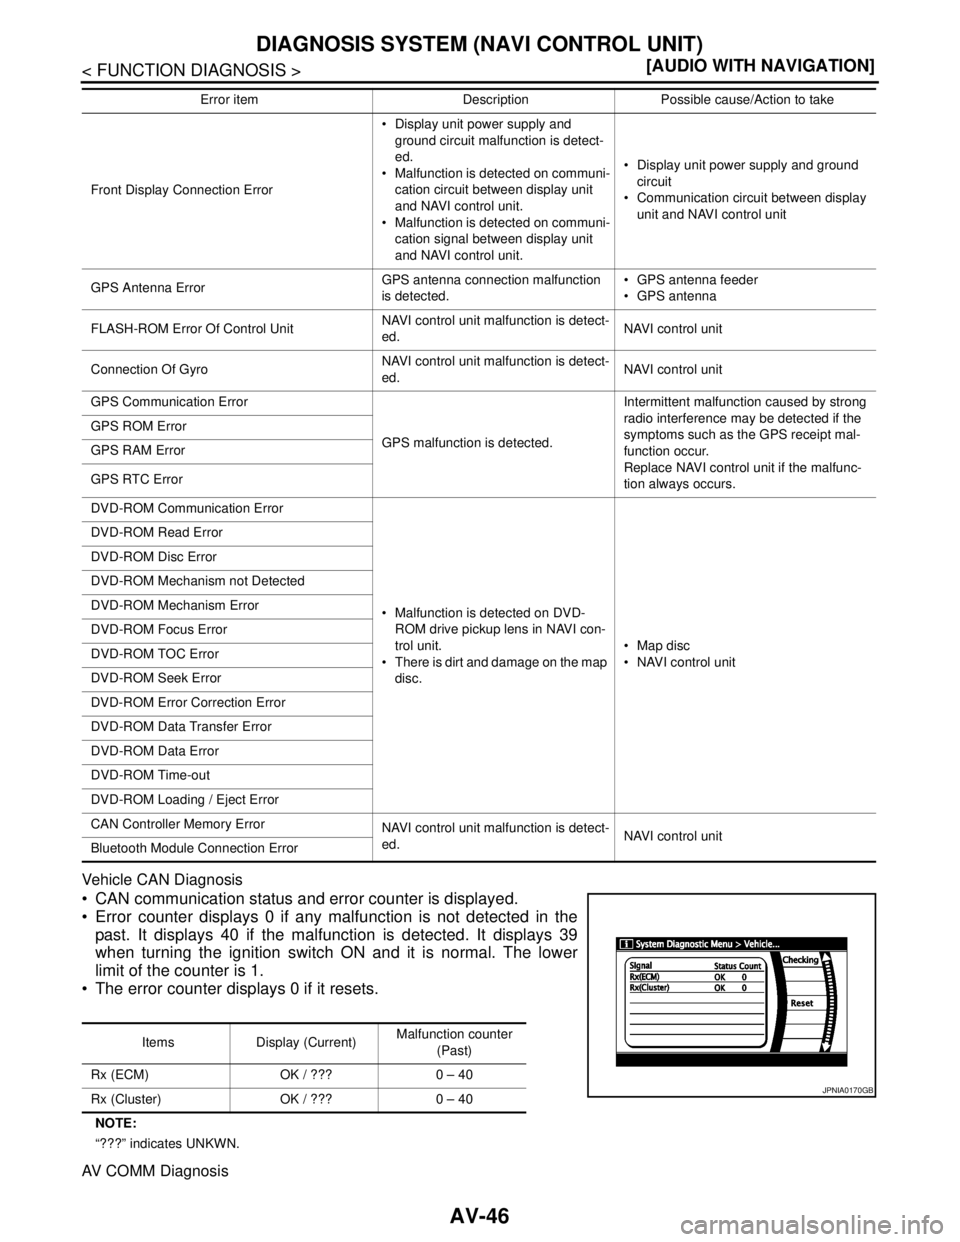 NISSAN TIIDA 2007  Service Repair Manual AV-46
< FUNCTION DIAGNOSIS >[AUDIO WITH NAVIGATION]
DIAGNOSIS SYSTEM (NAVI CONTROL UNIT)
Vehicle CAN Diagnosis
 CAN communication status and error counter is displayed.
 Error counter displays 0 if 